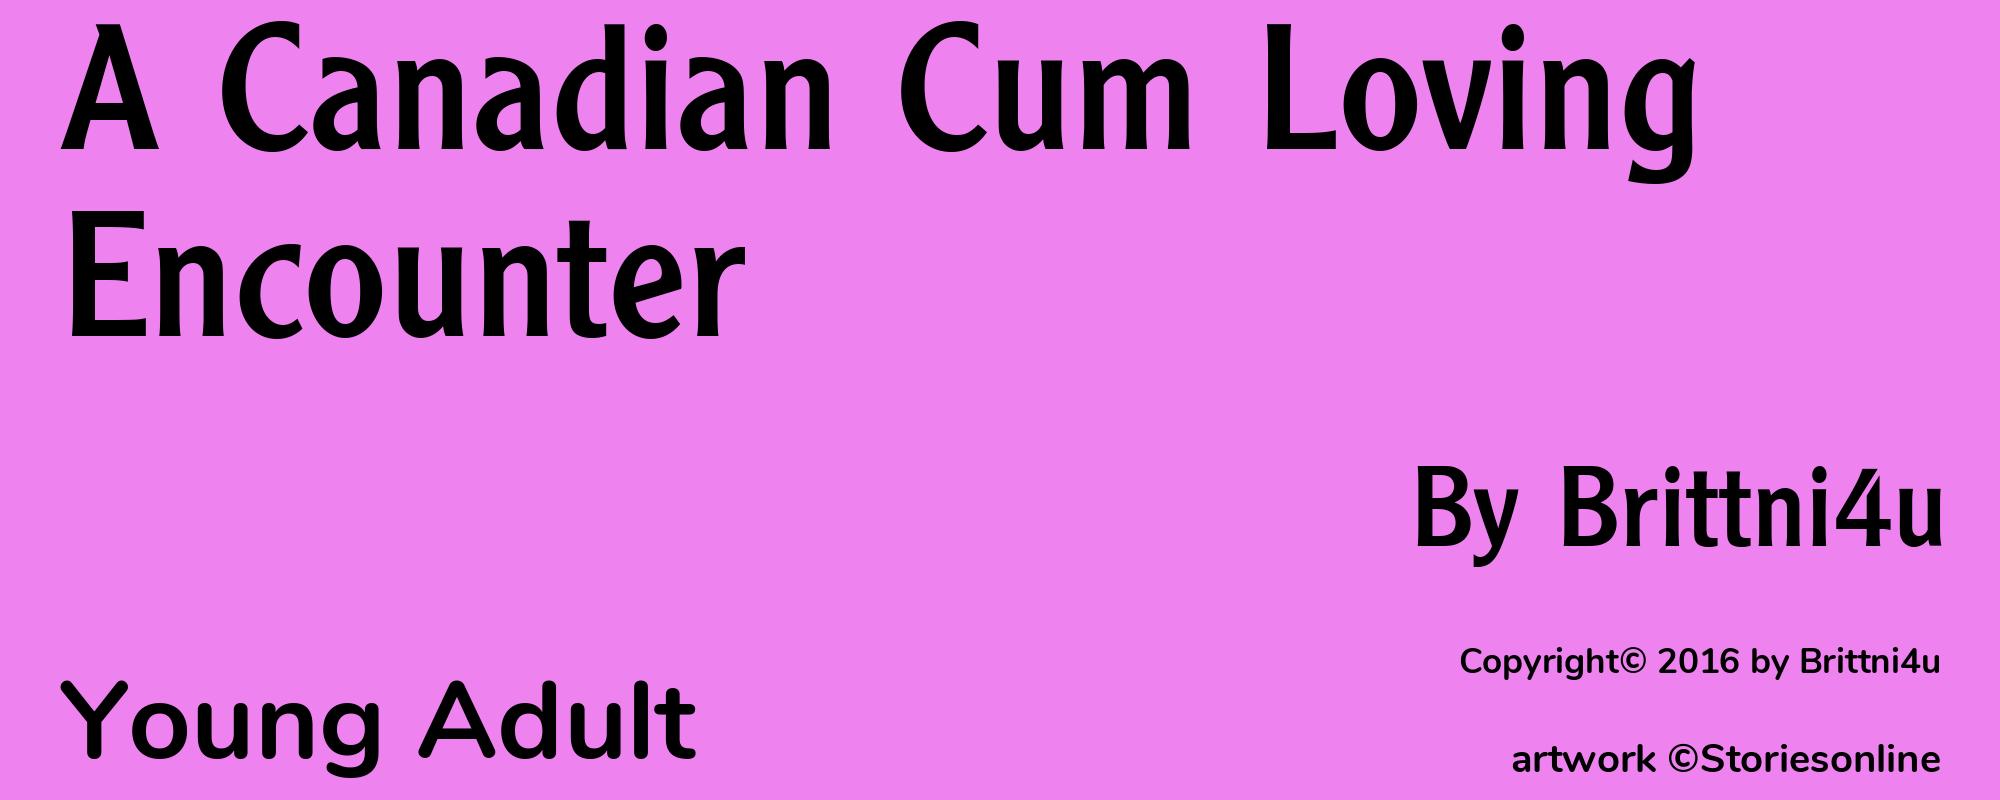 A Canadian Cum Loving Encounter - Cover